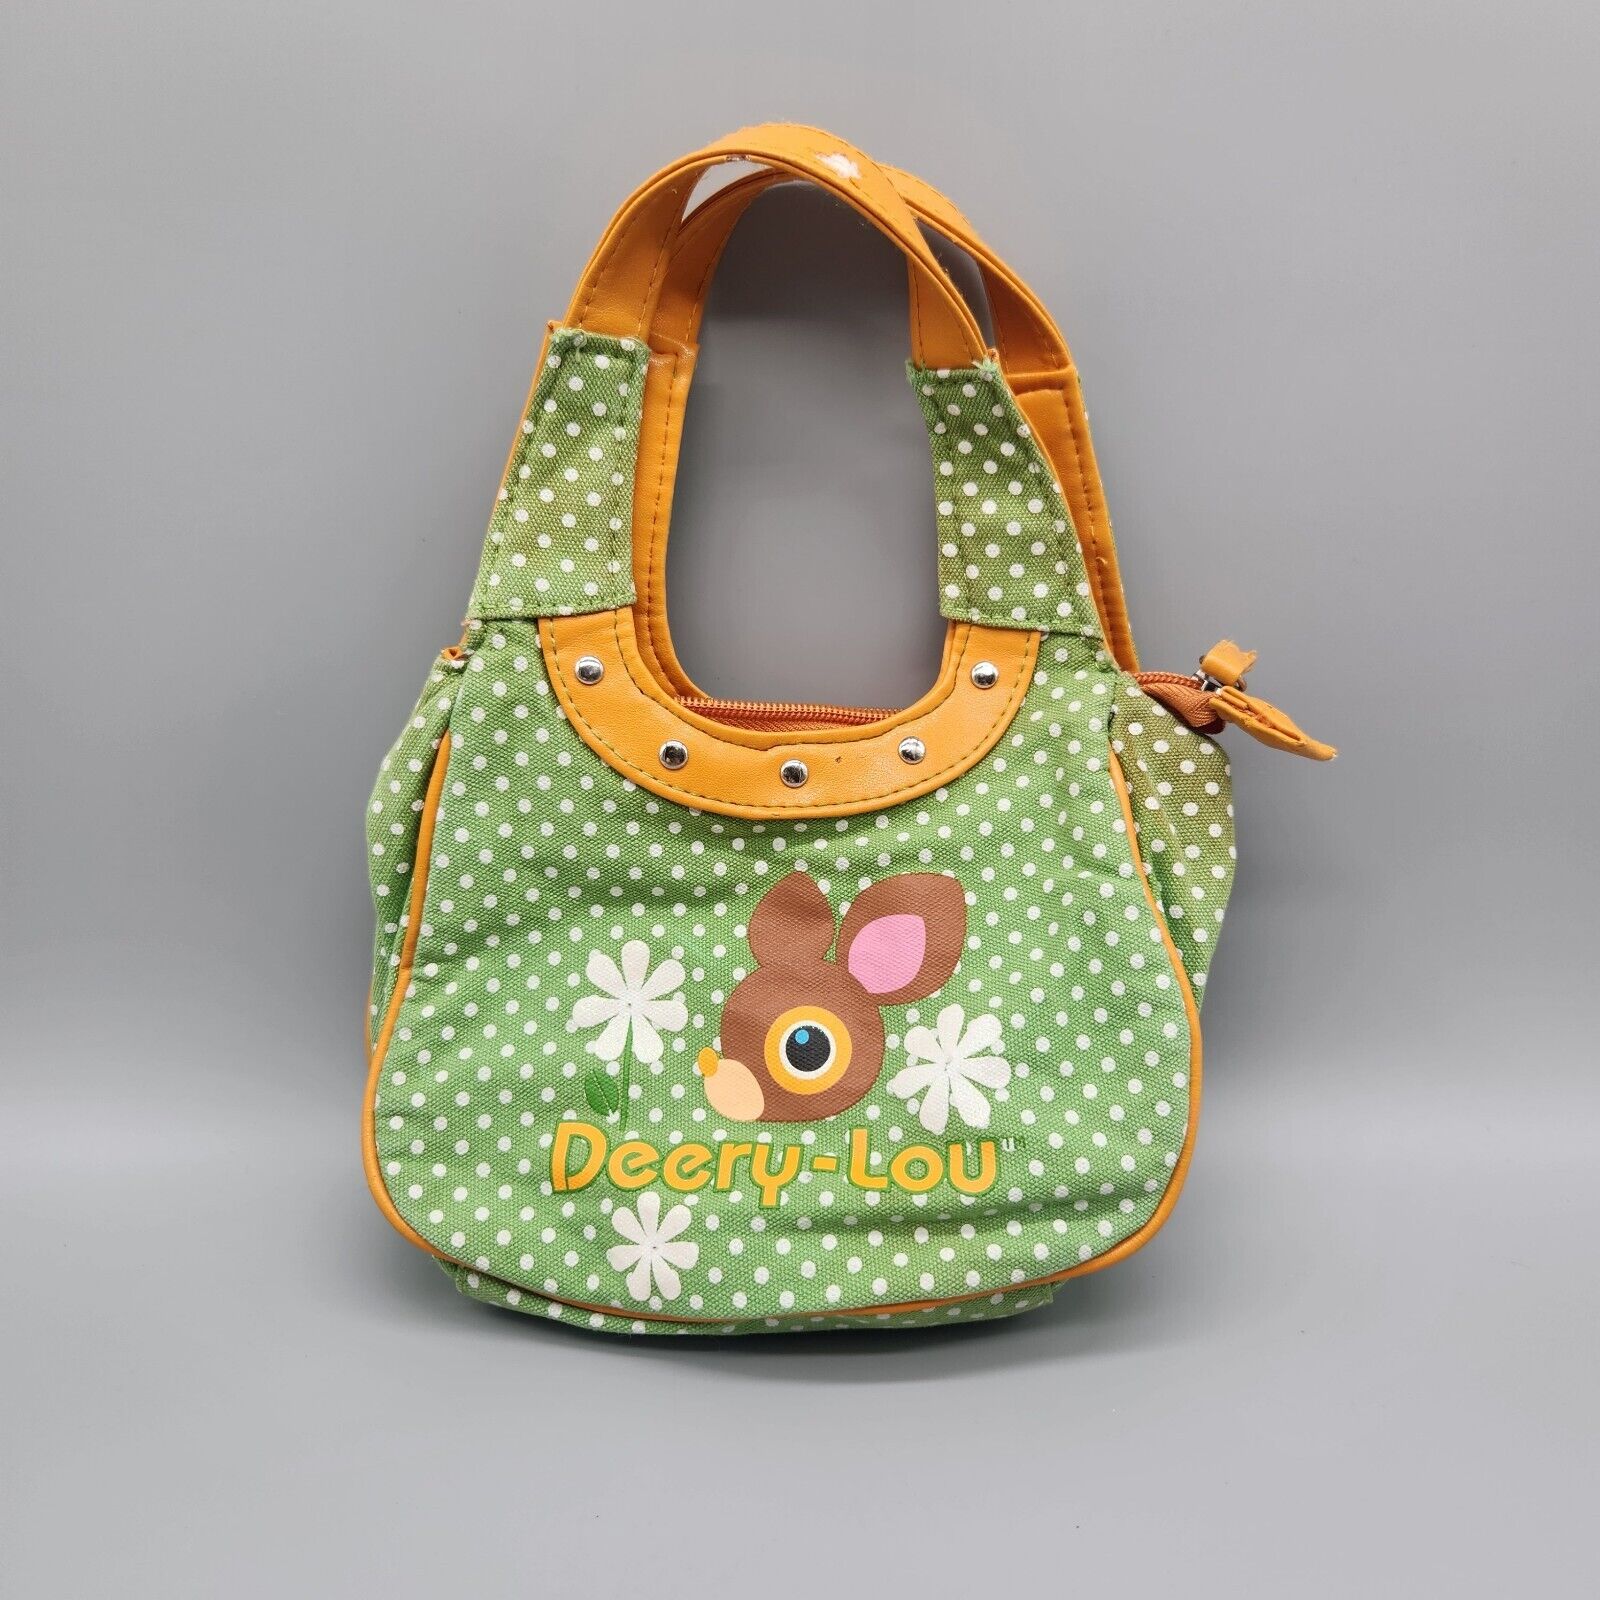 Deery-Lou Sanrio Bag Purse Small Green White Polka Dots Deer Adorable HTF *READ